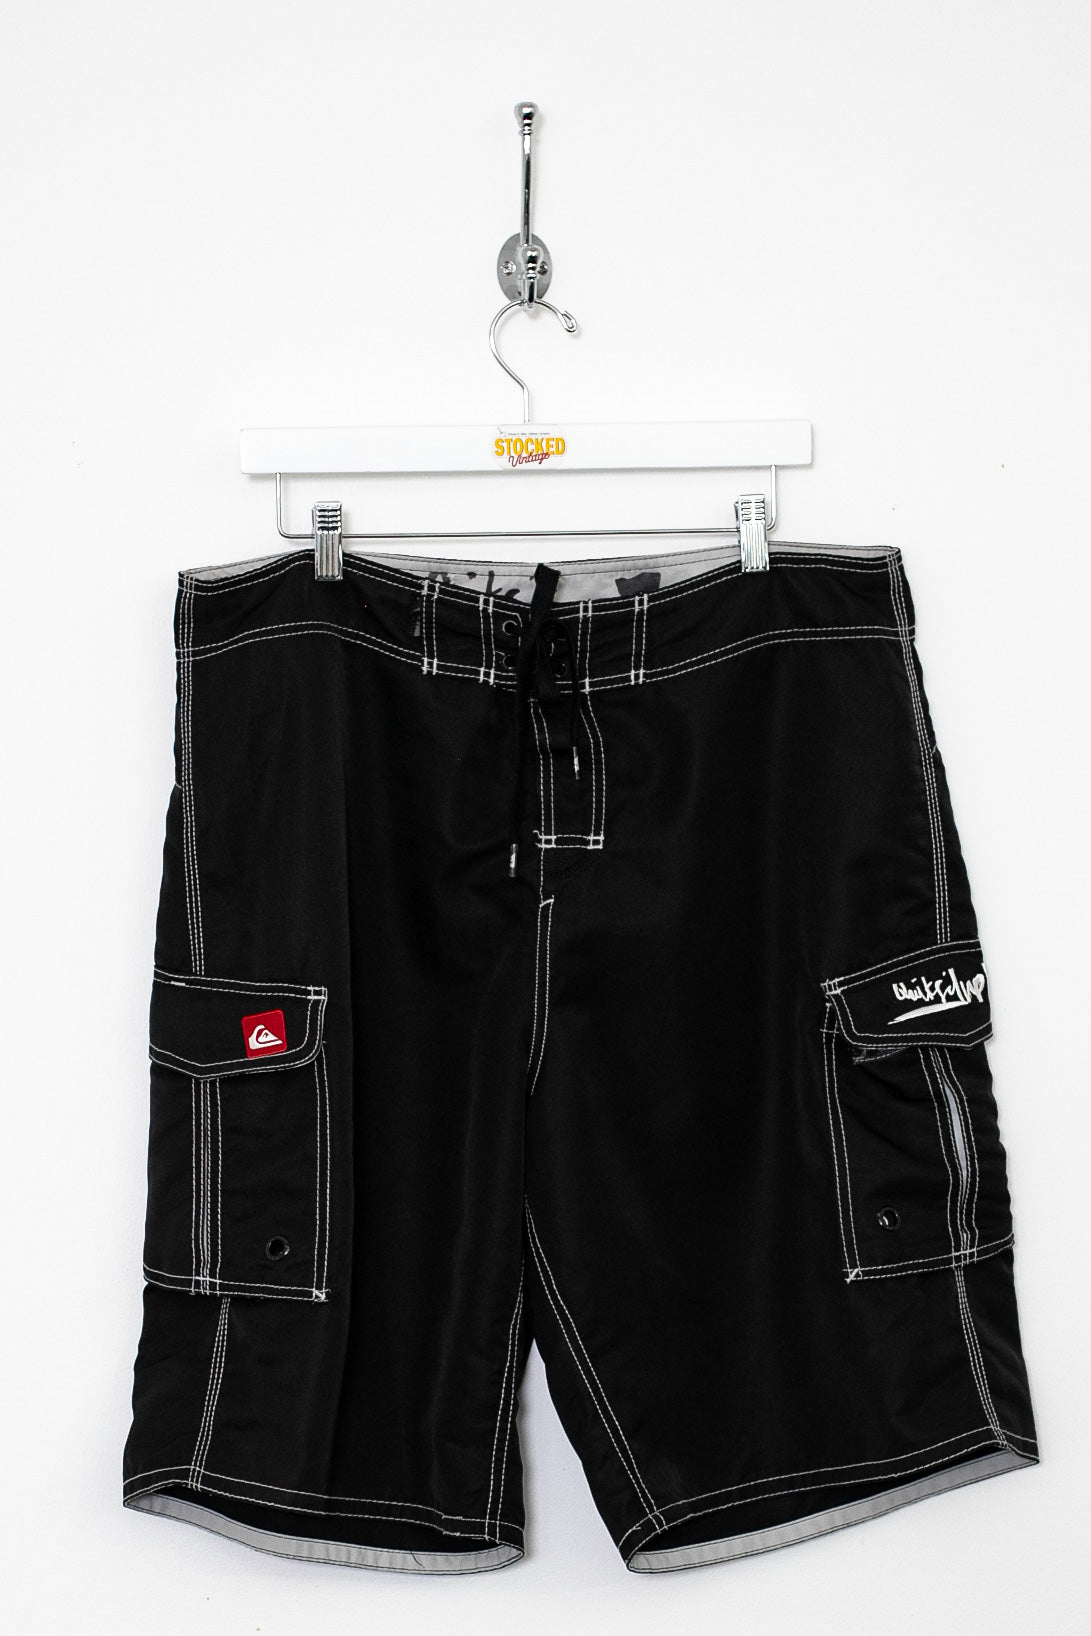 00s Quicksilver Shorts (L)